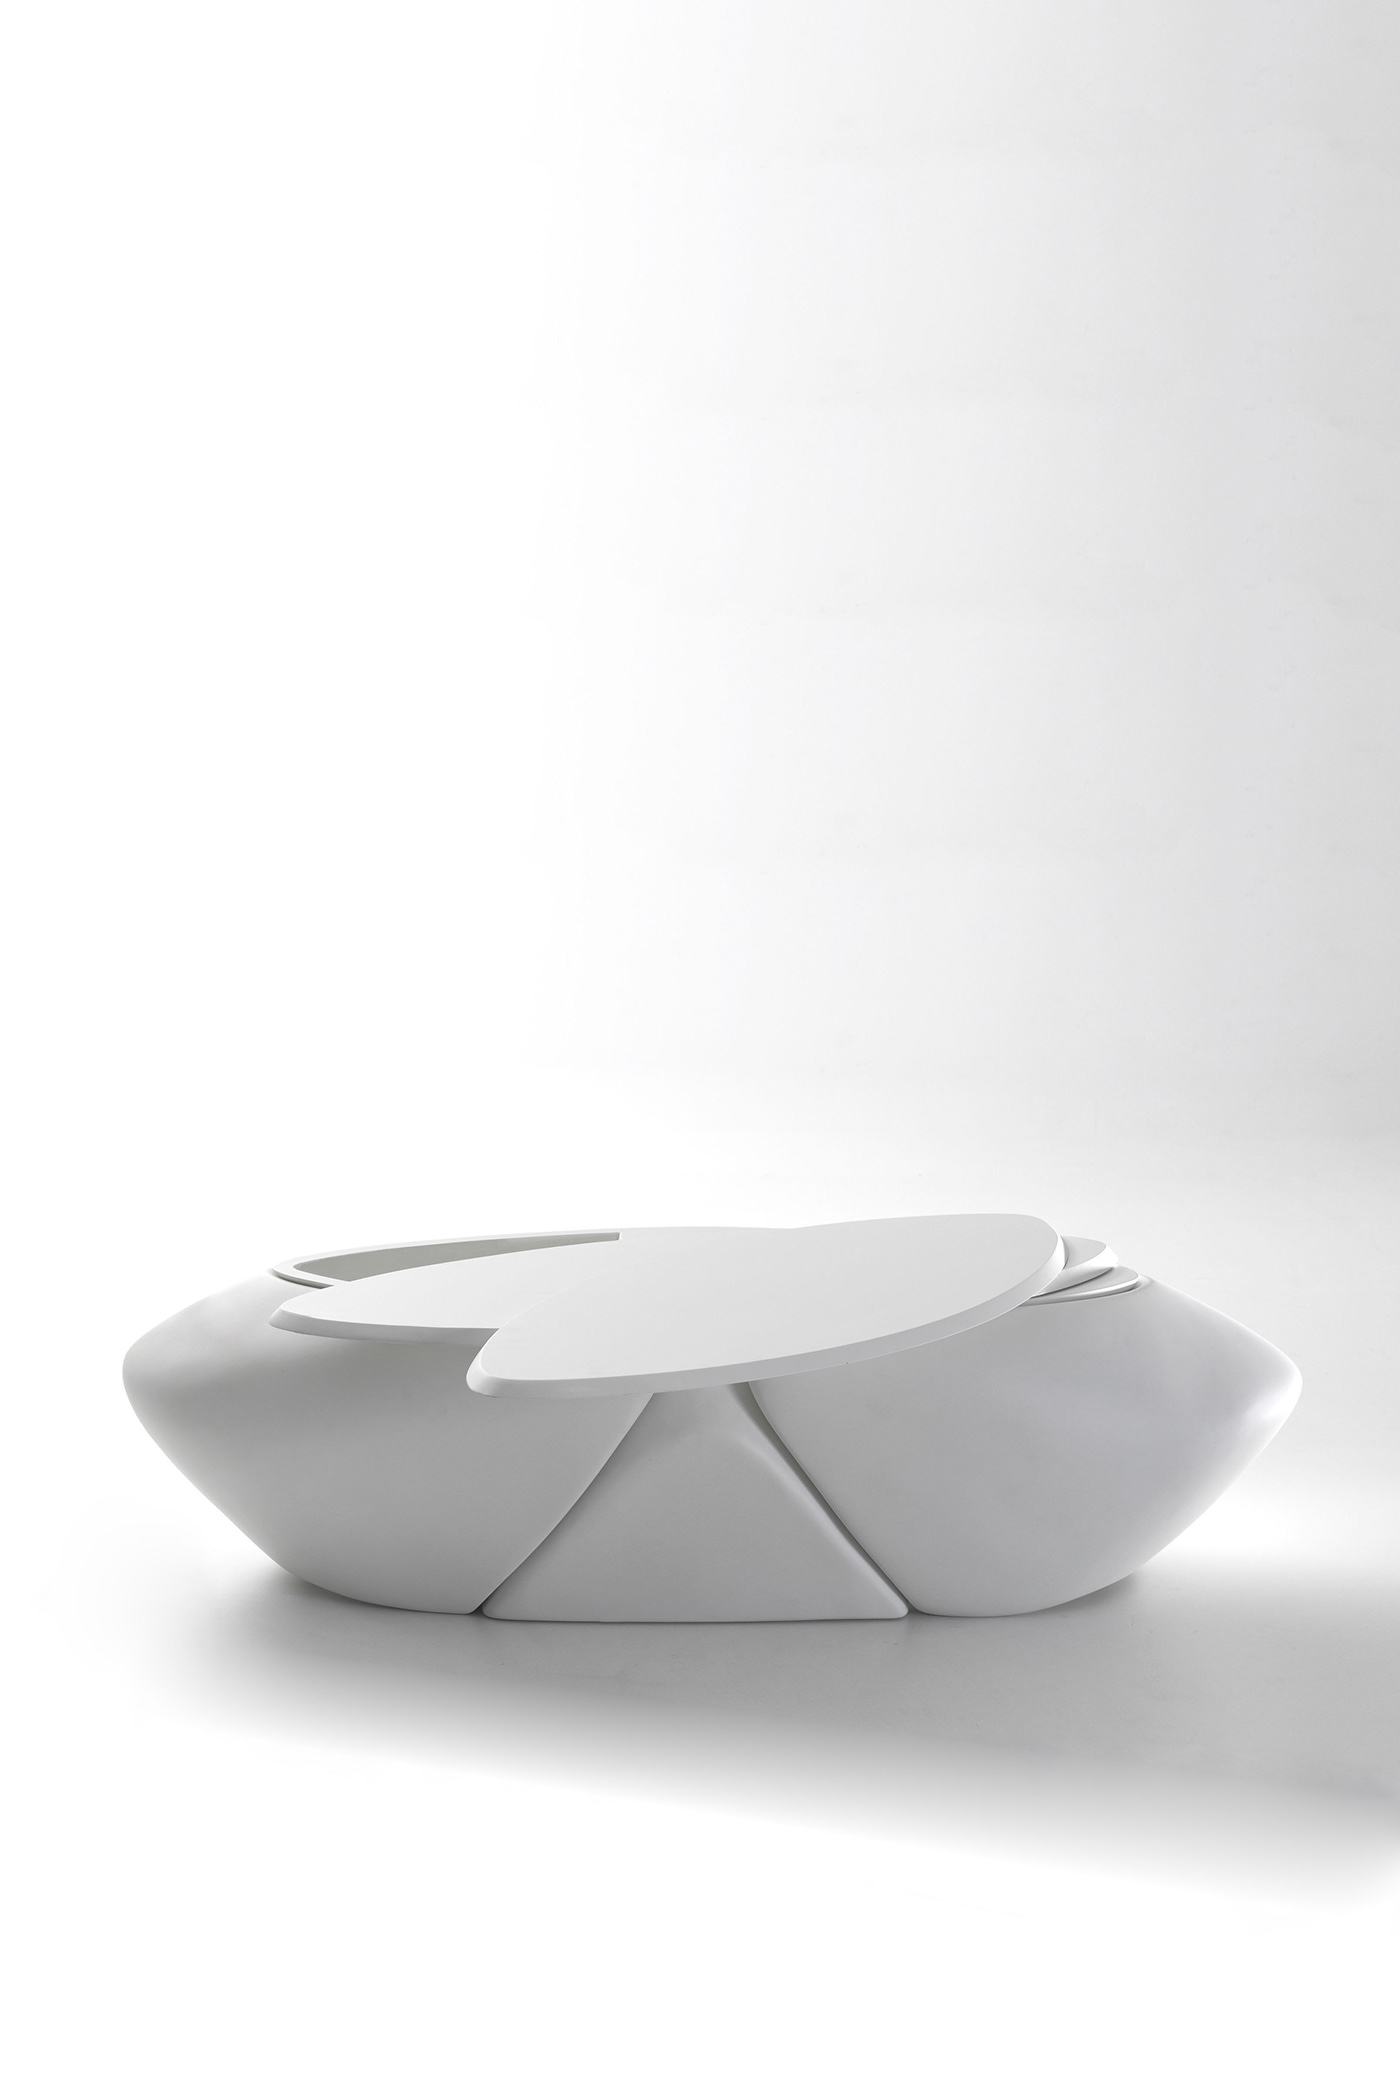 table folding seats Interior exterior White design Minimalism prototype